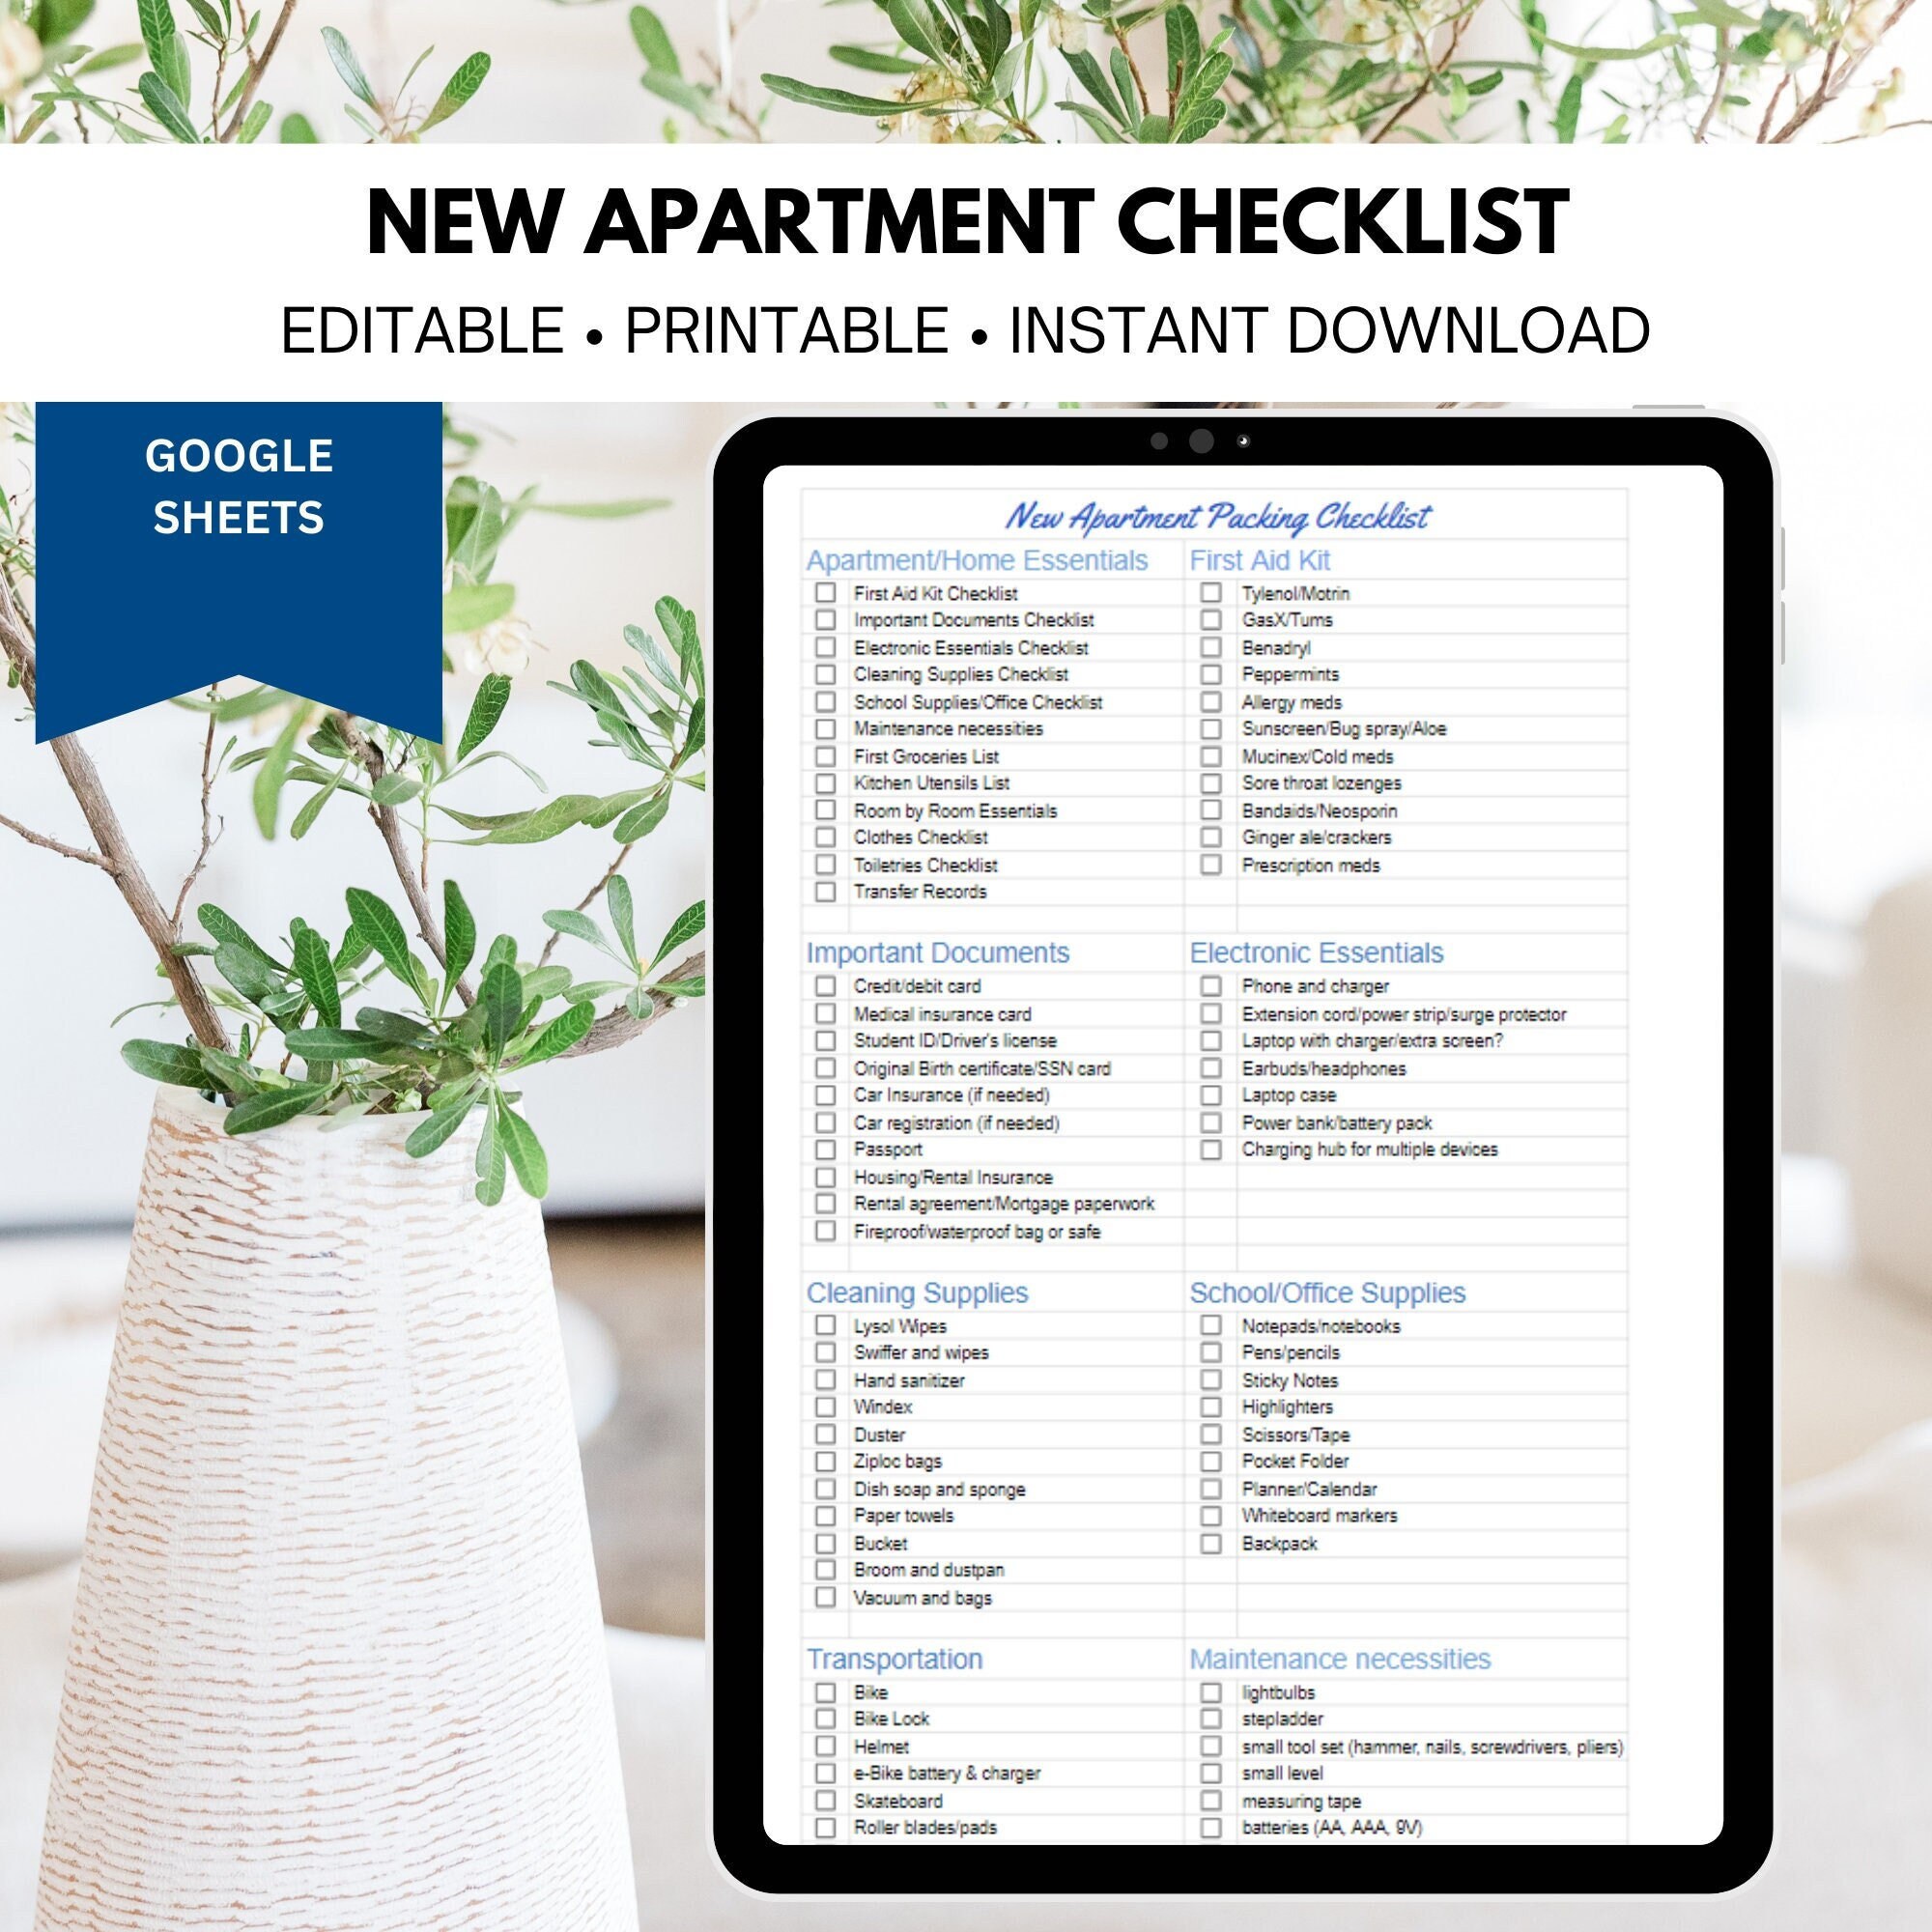 First / New Apartment Checklist - 40 Essential Templates ᐅ TemplateLab